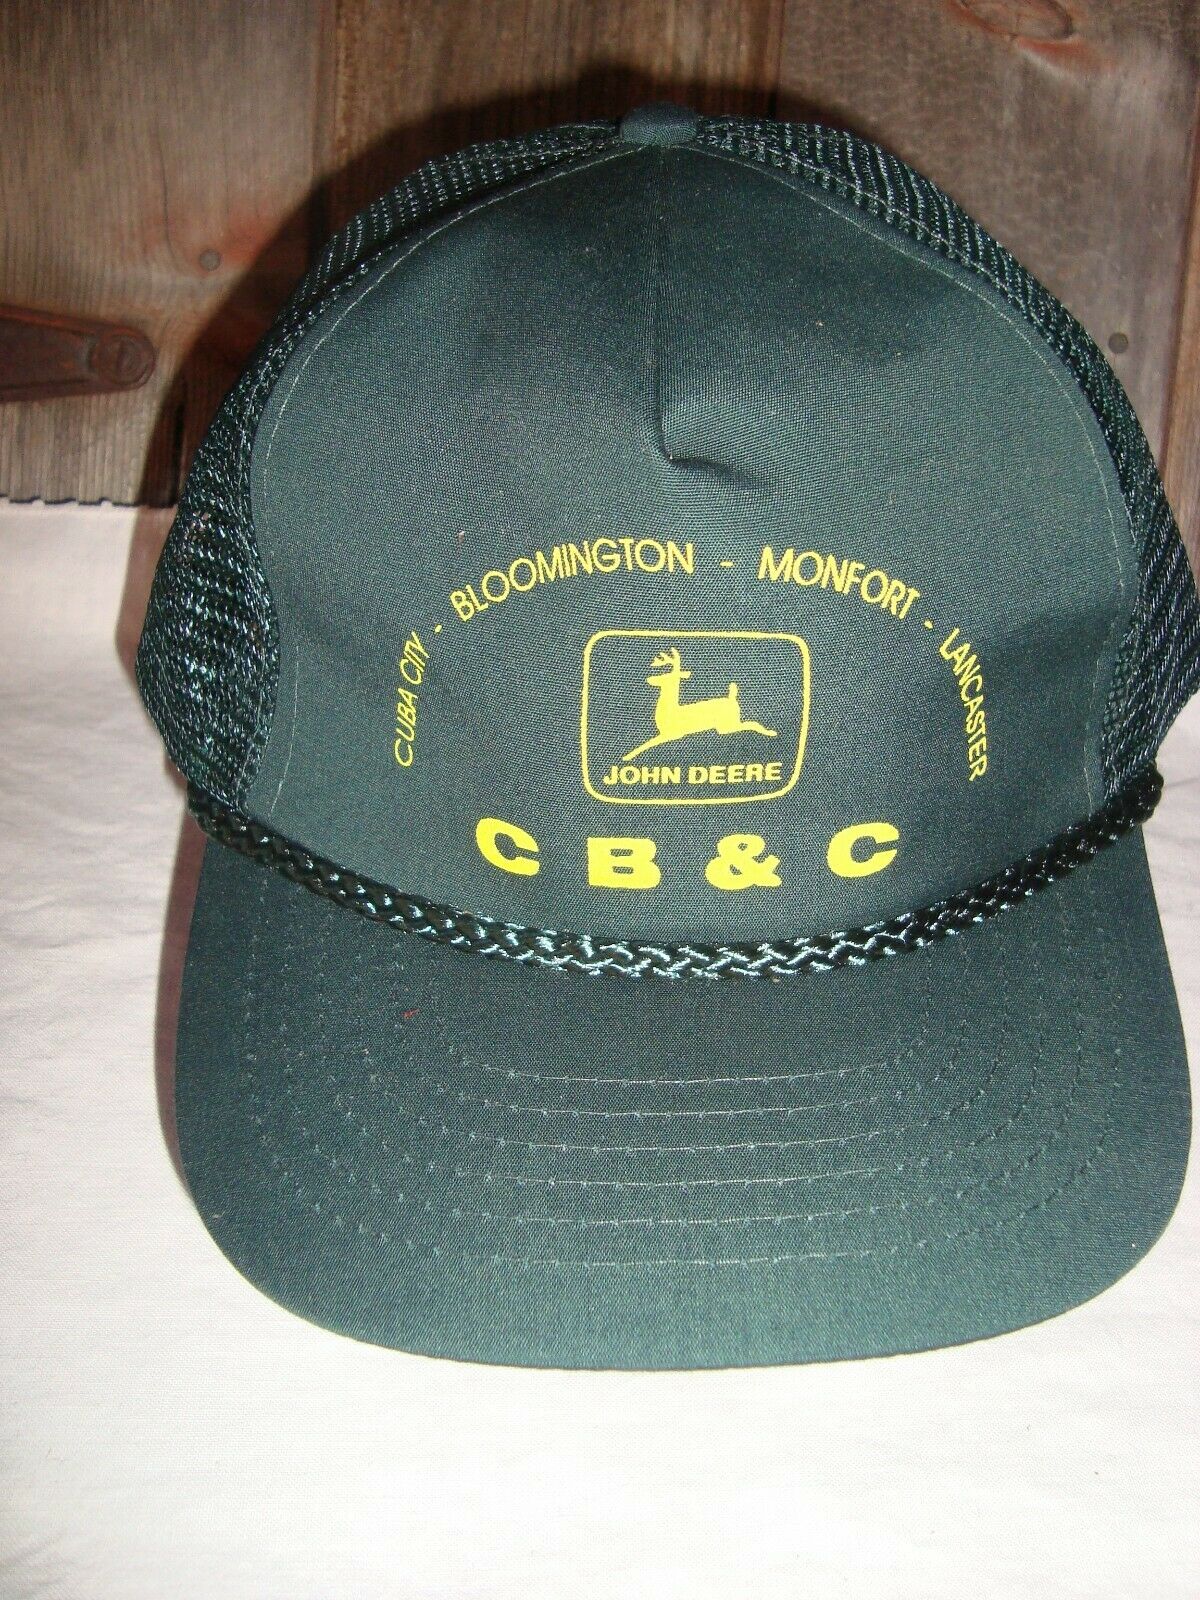 John Deere C B & C Adjustable Snapback Mesh Back Cap/hat Nwot